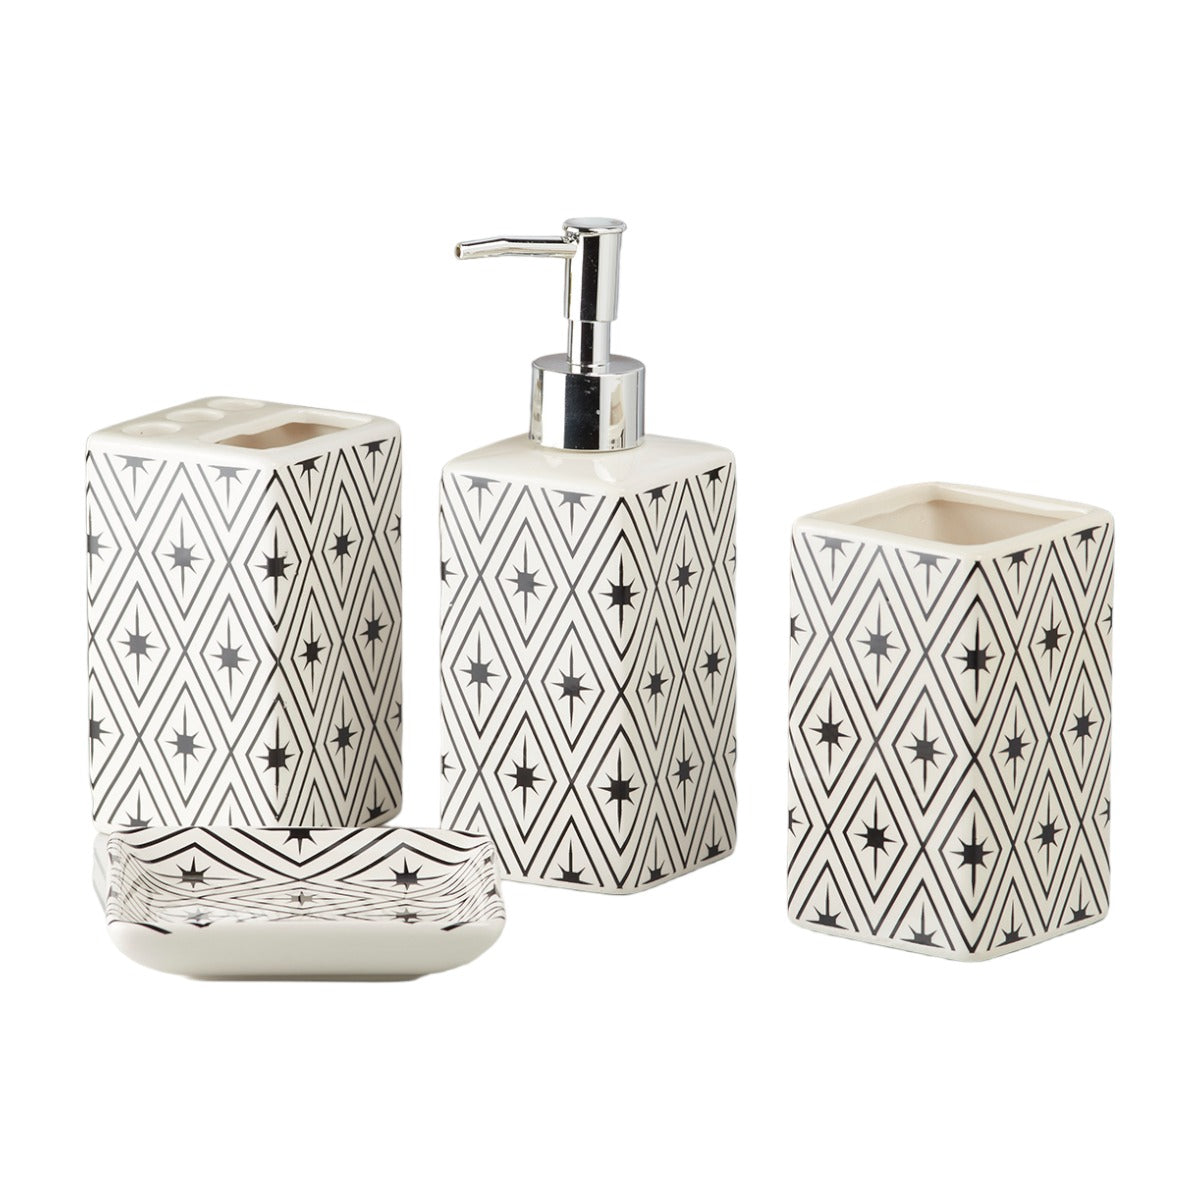 Ceramic Bathroom Accessories Set of 4 Bath Set with Soap Dispenser (9843)